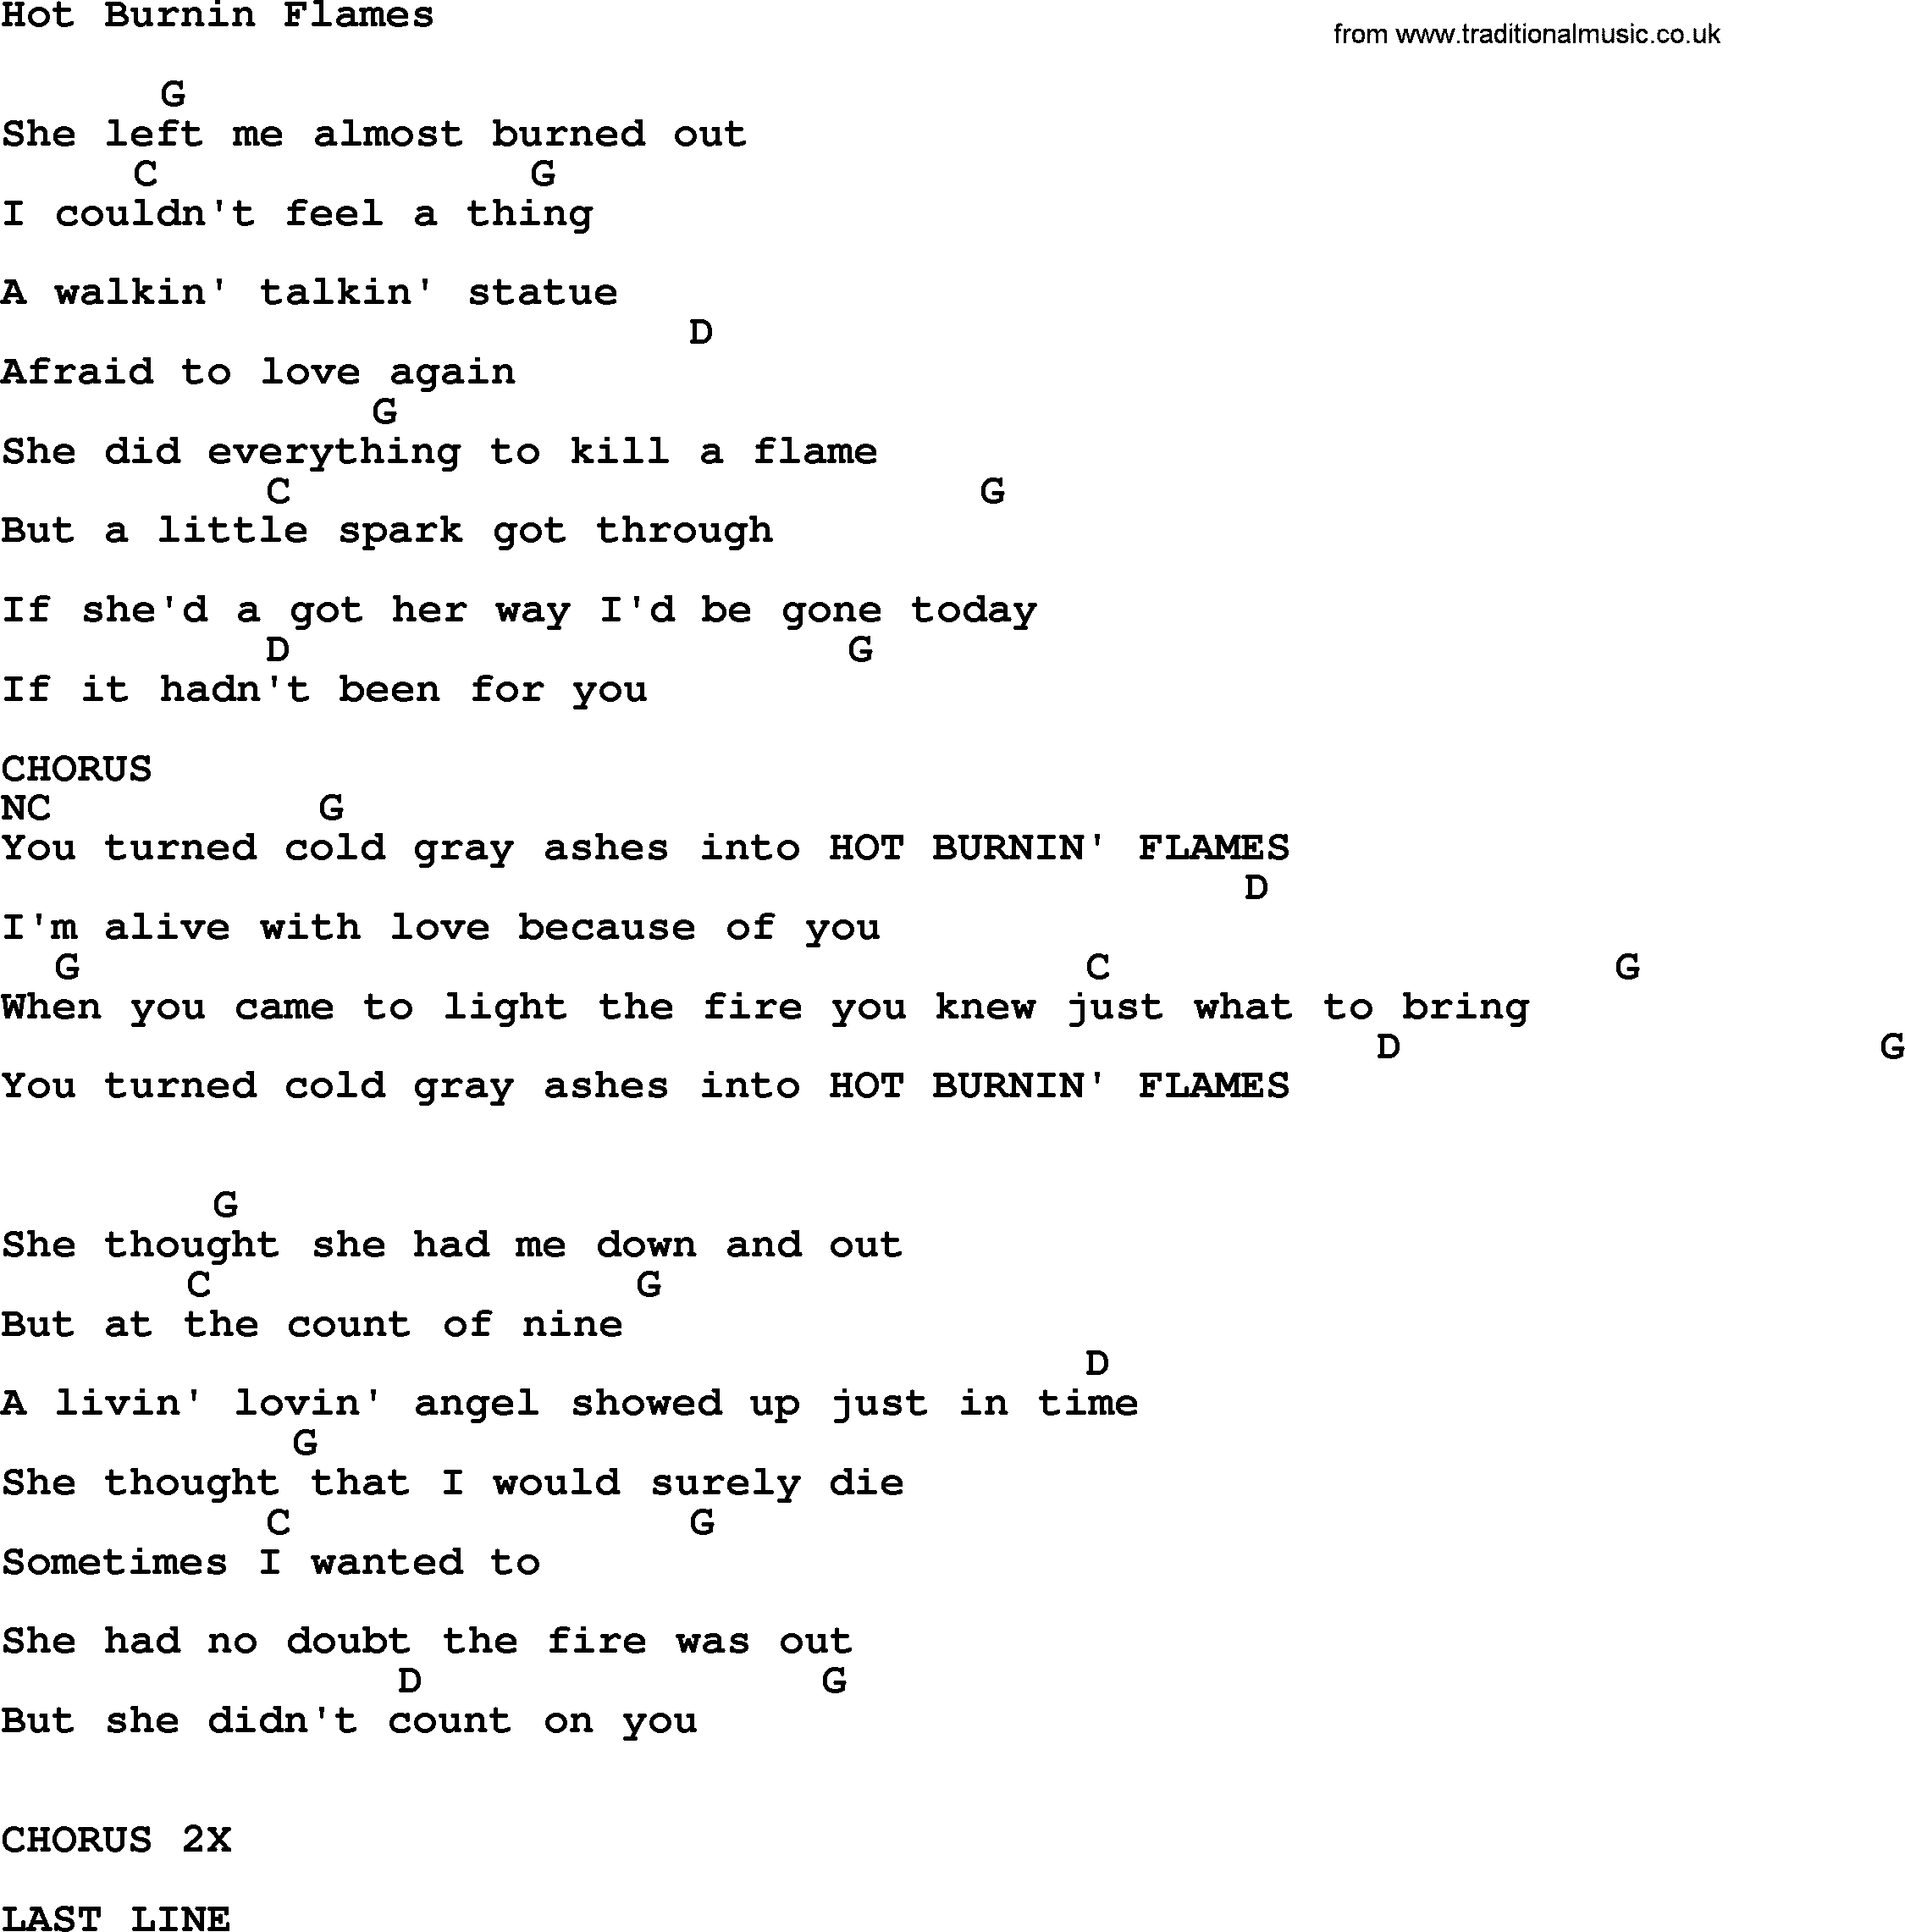 George Strait song: Hot Burnin Flames, lyrics and chords